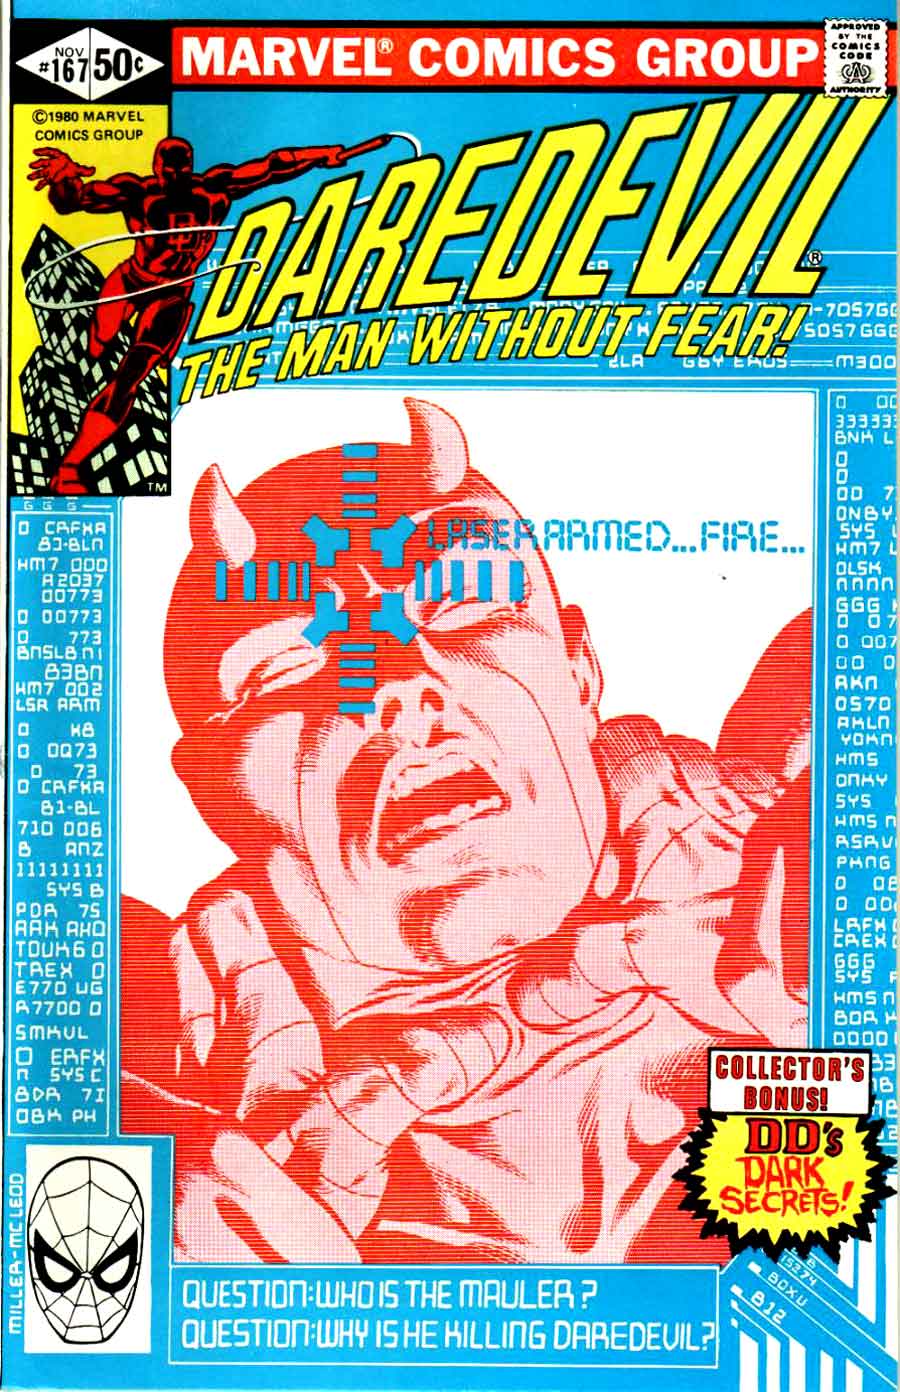 Daredevil v1 #167 marvel comic book cover art by Frank Miller